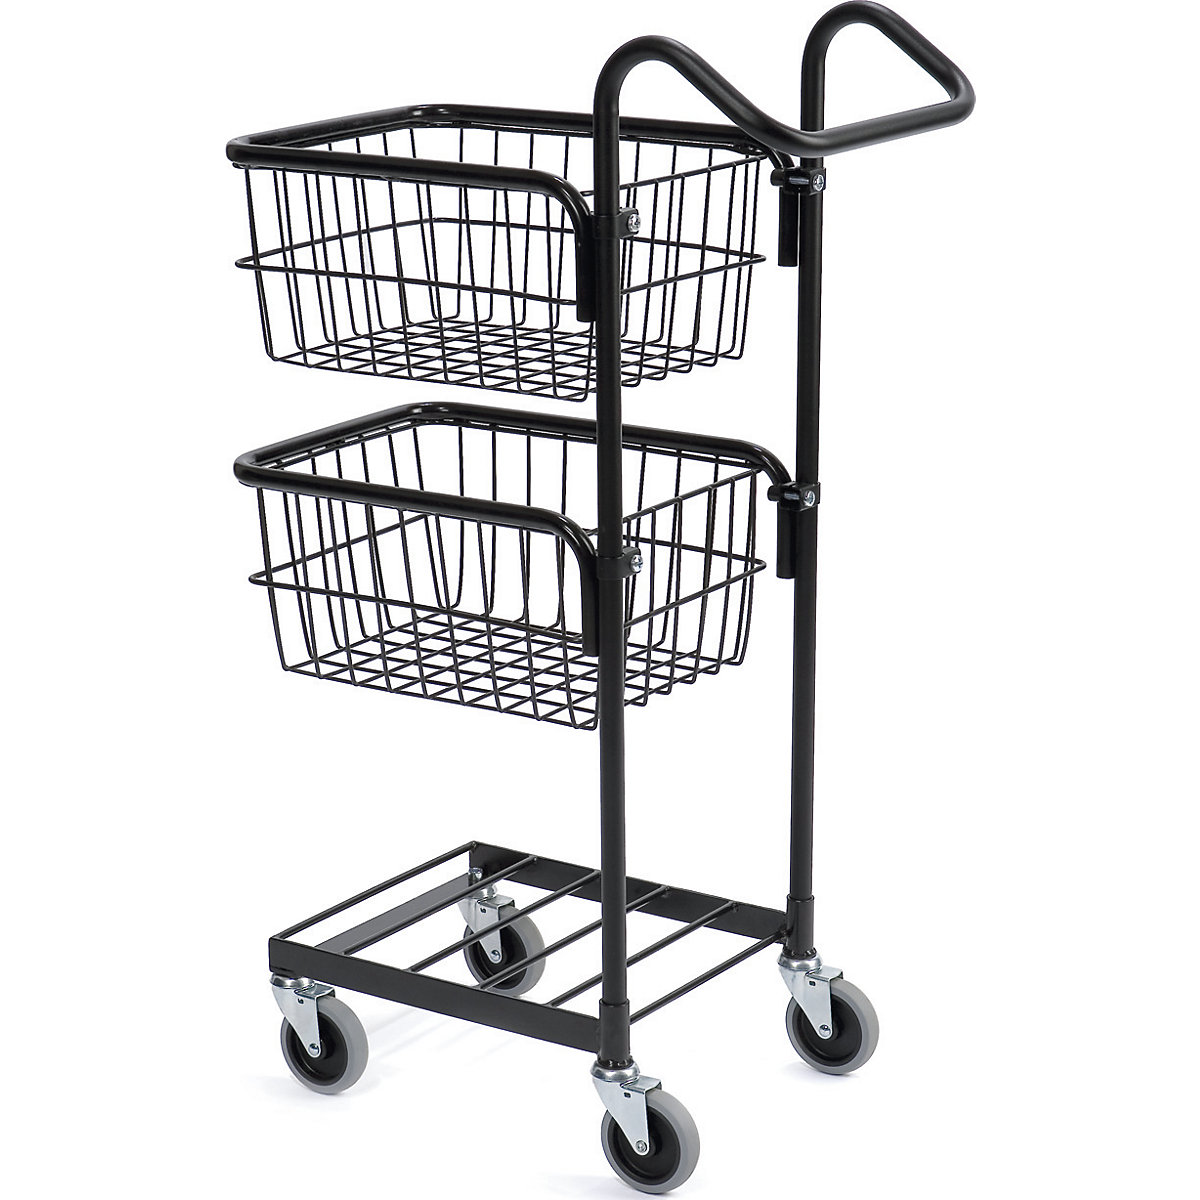 KOMPAKT retail bin – HelgeNyberg, 2 baskets, black frame, 5+ items-1